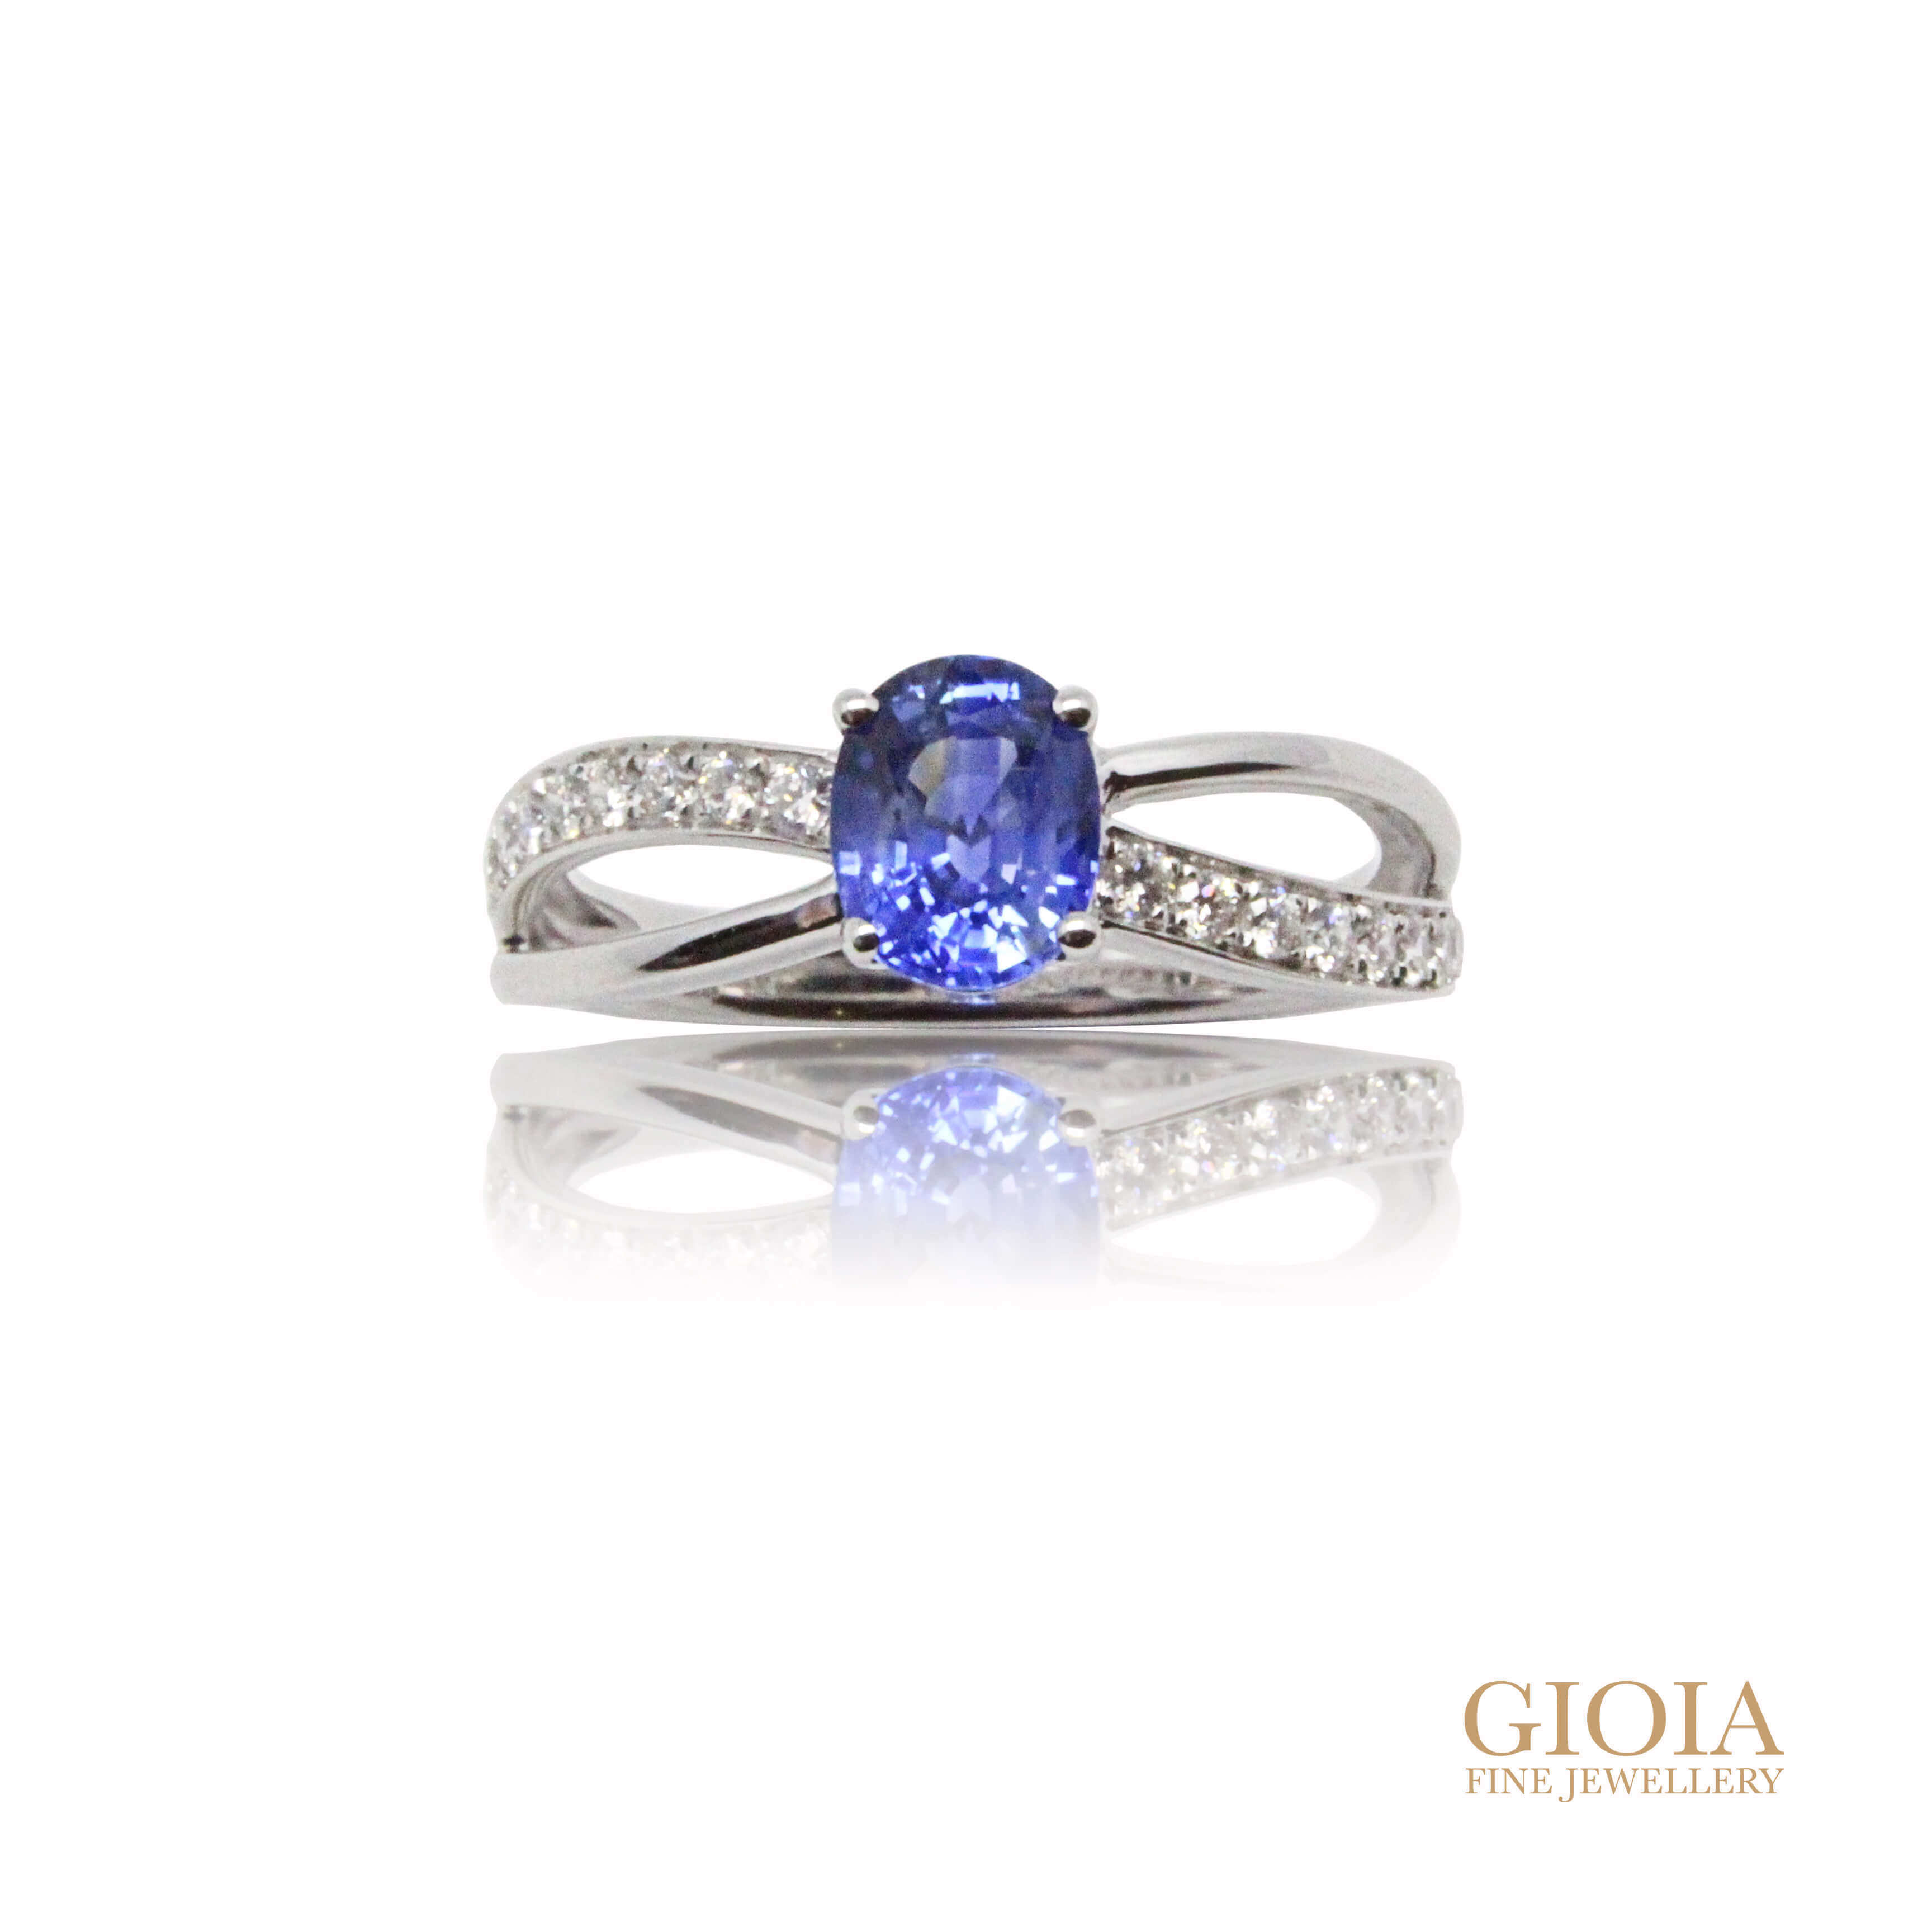 Bespoke customised Blue sapphire Ring